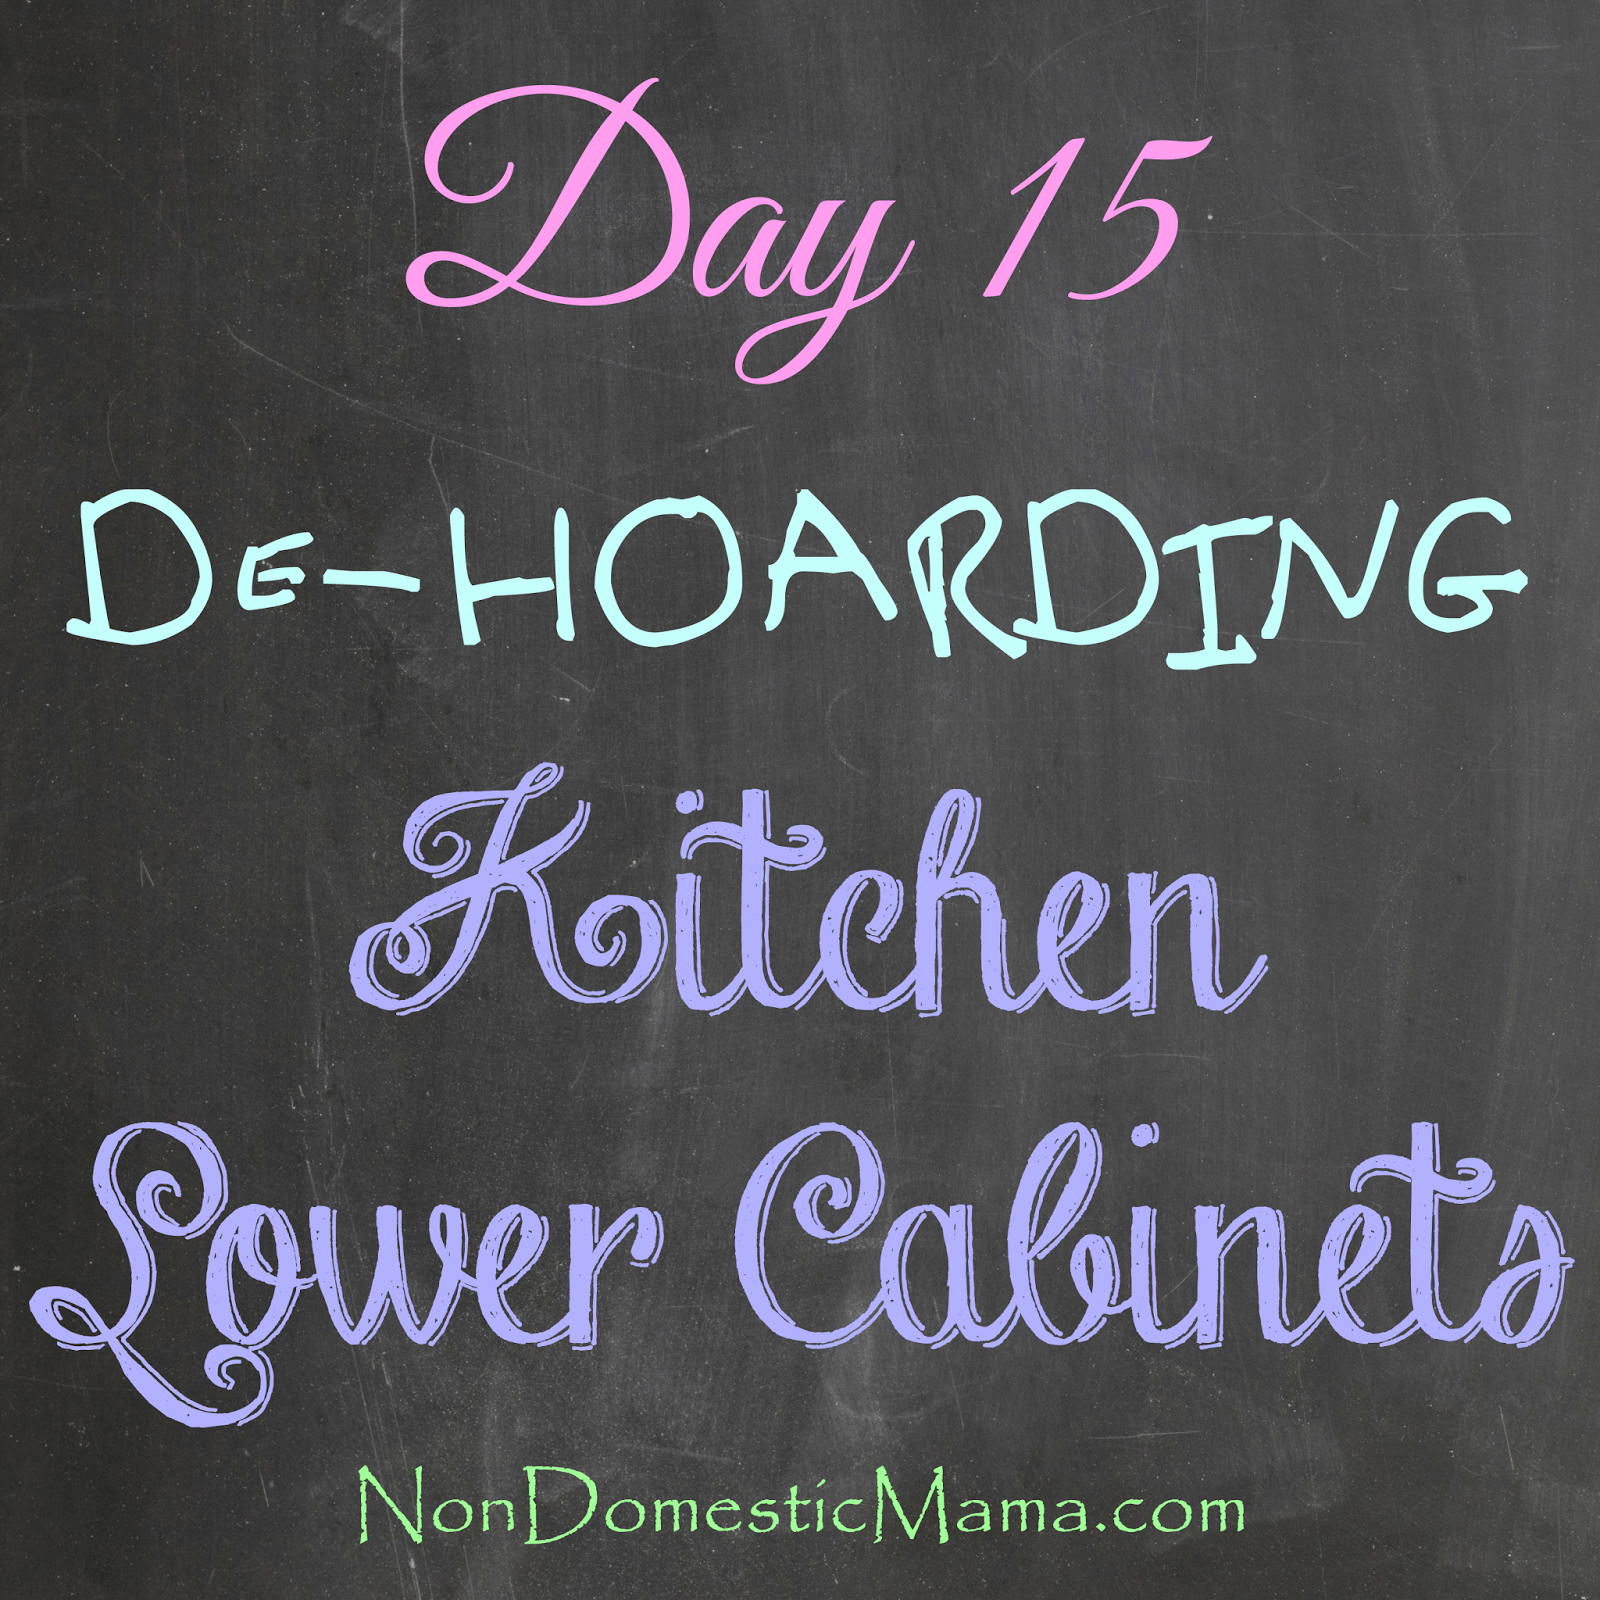 {Day 15} Lower Cabinets - 31 Days of De-Hoarding #write31days #dehoarding